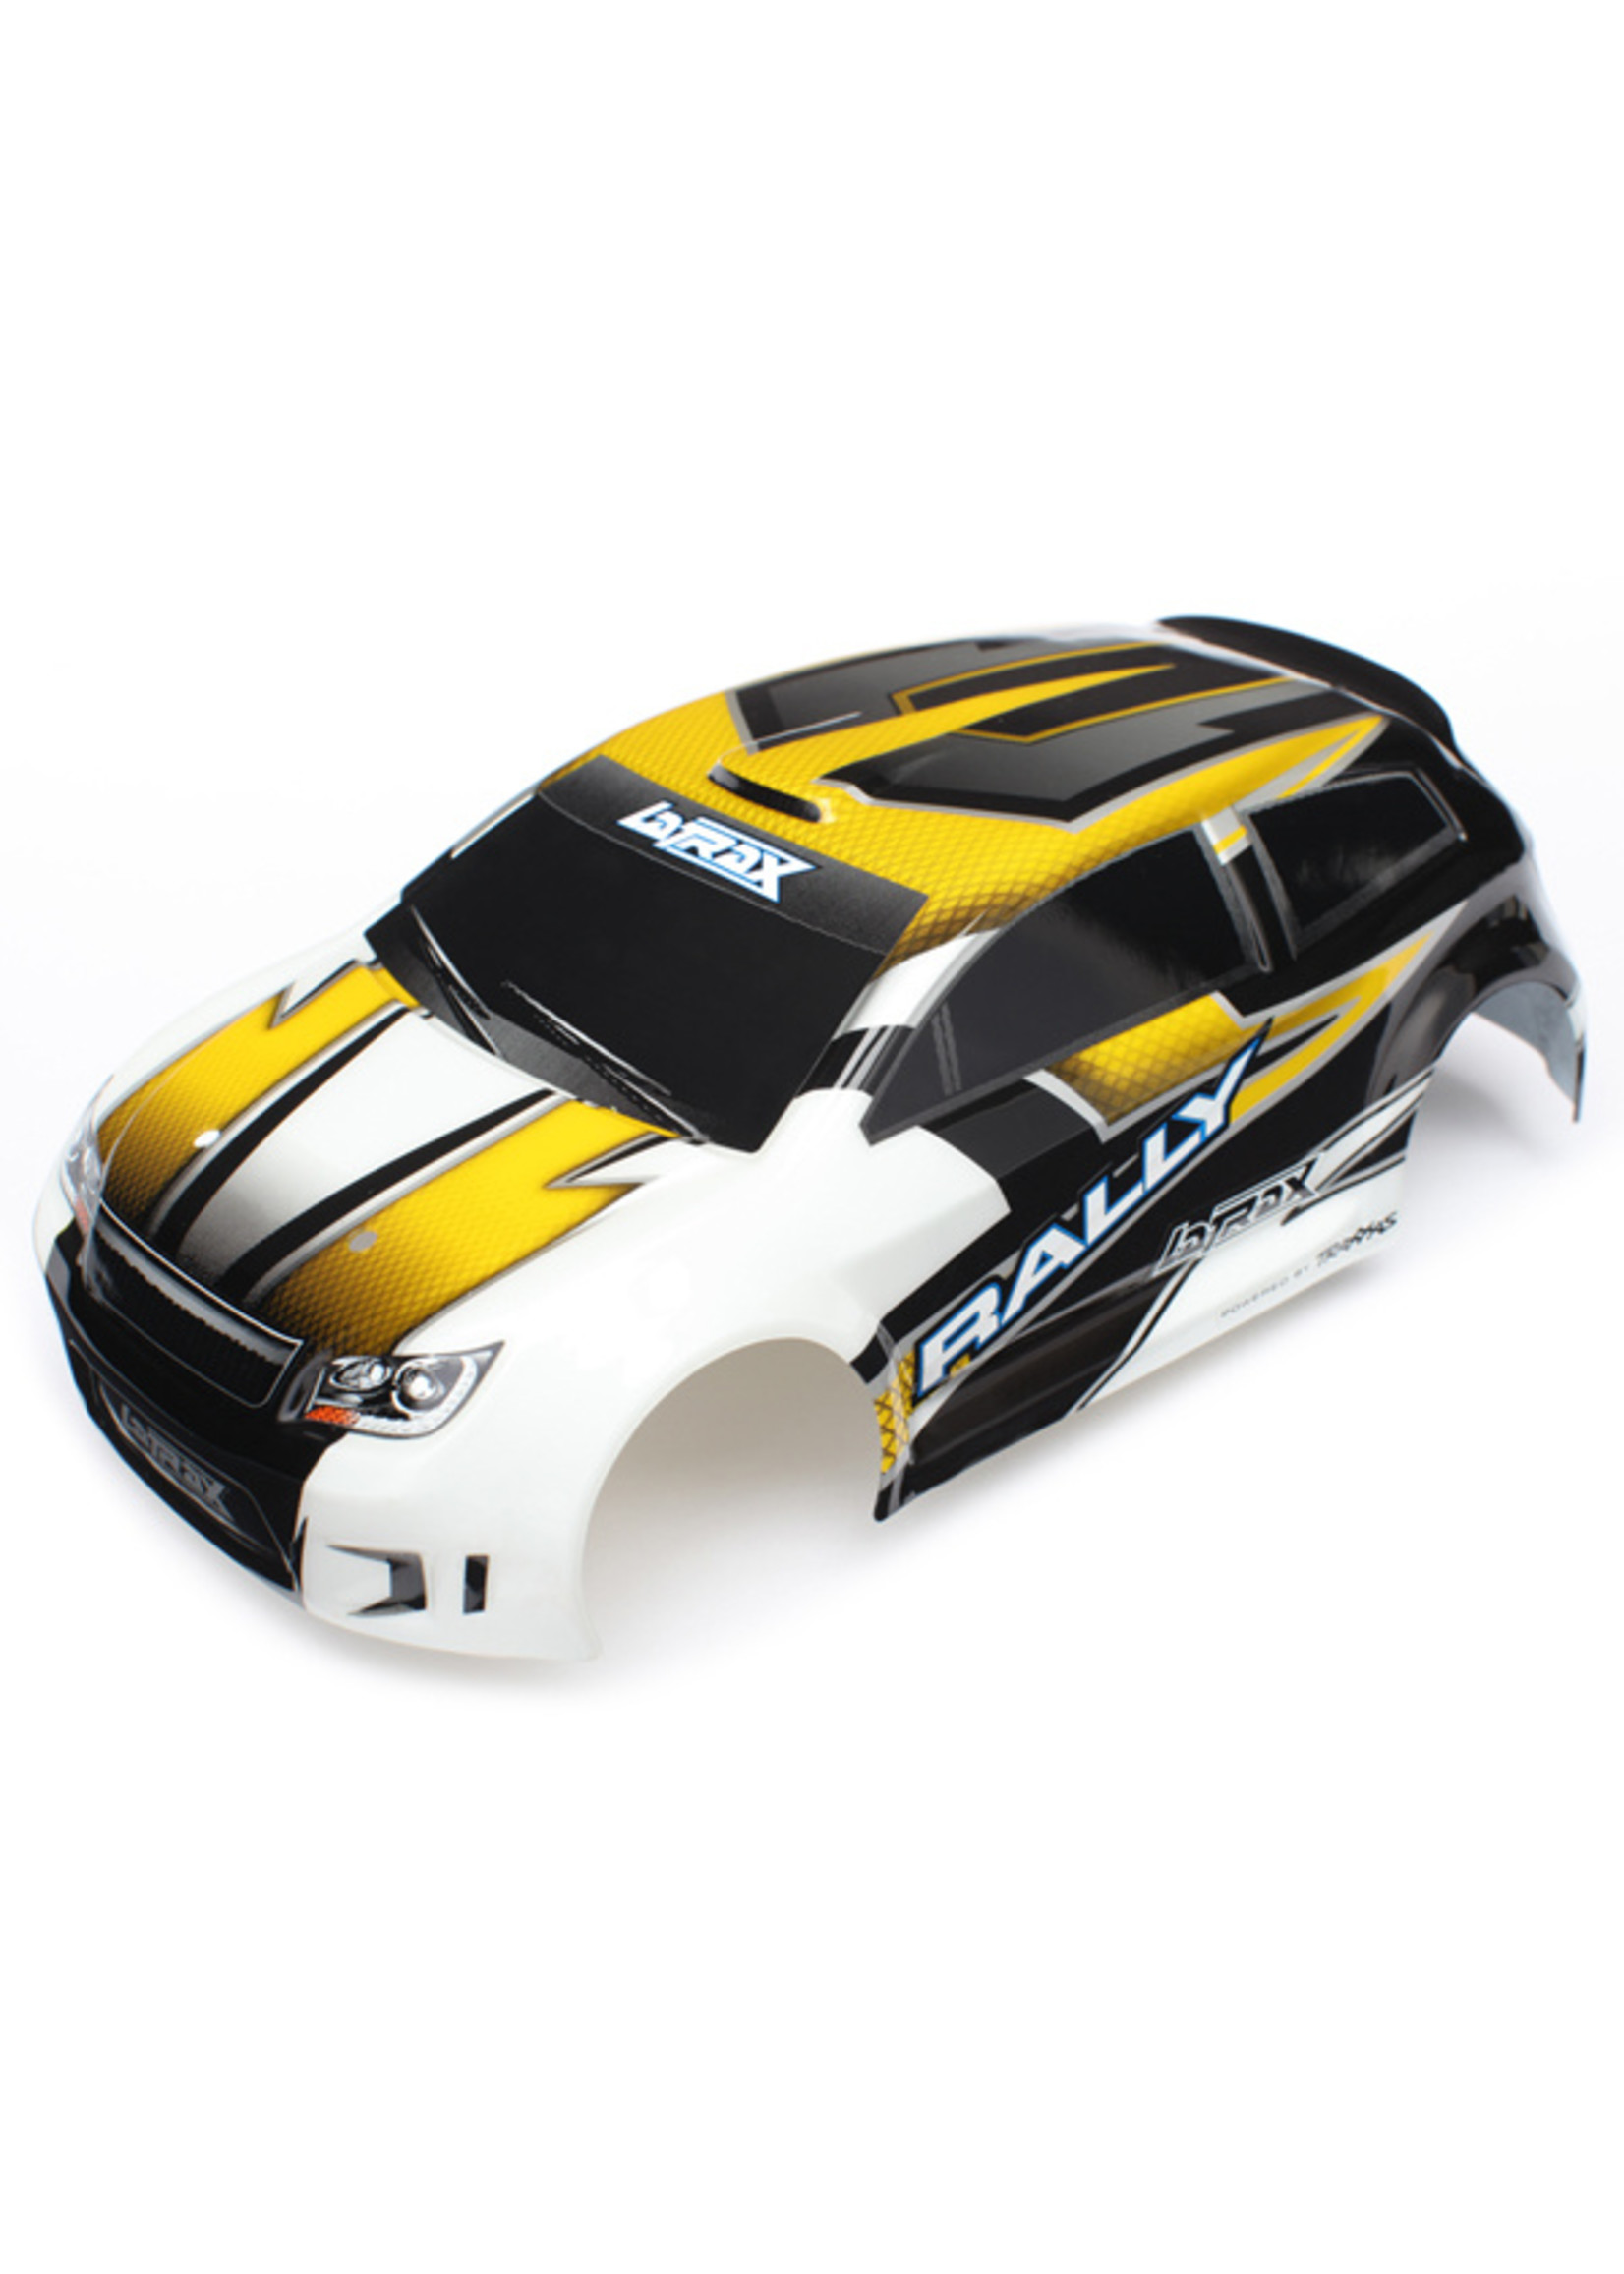 Traxxas 7512 - 1/18 LaTrax Rally Body - Yellow